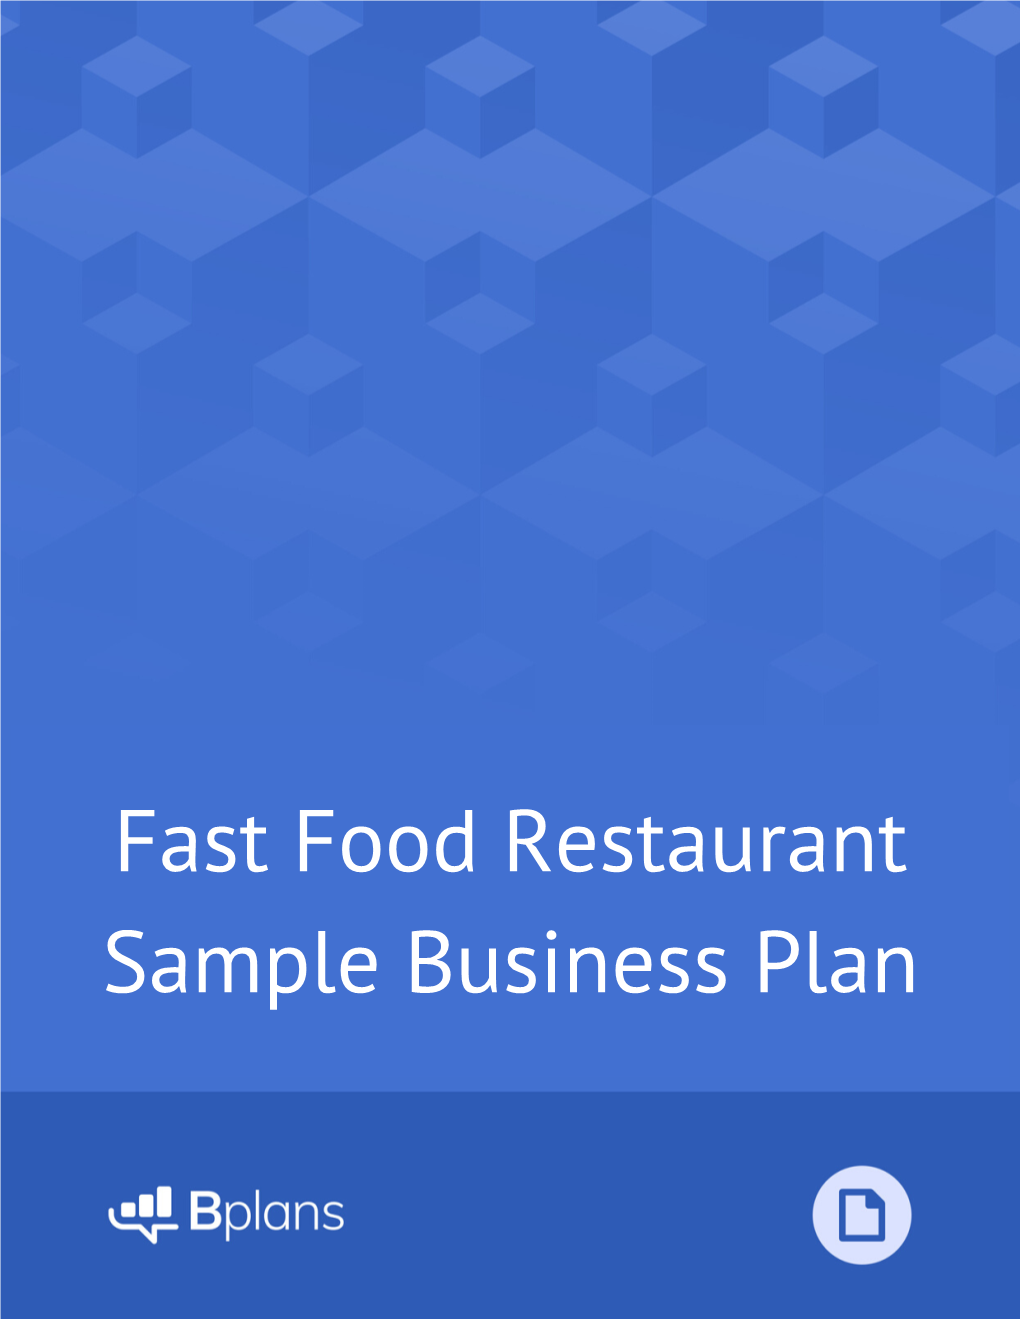 Fast Food Restaurant Sample Business Plan